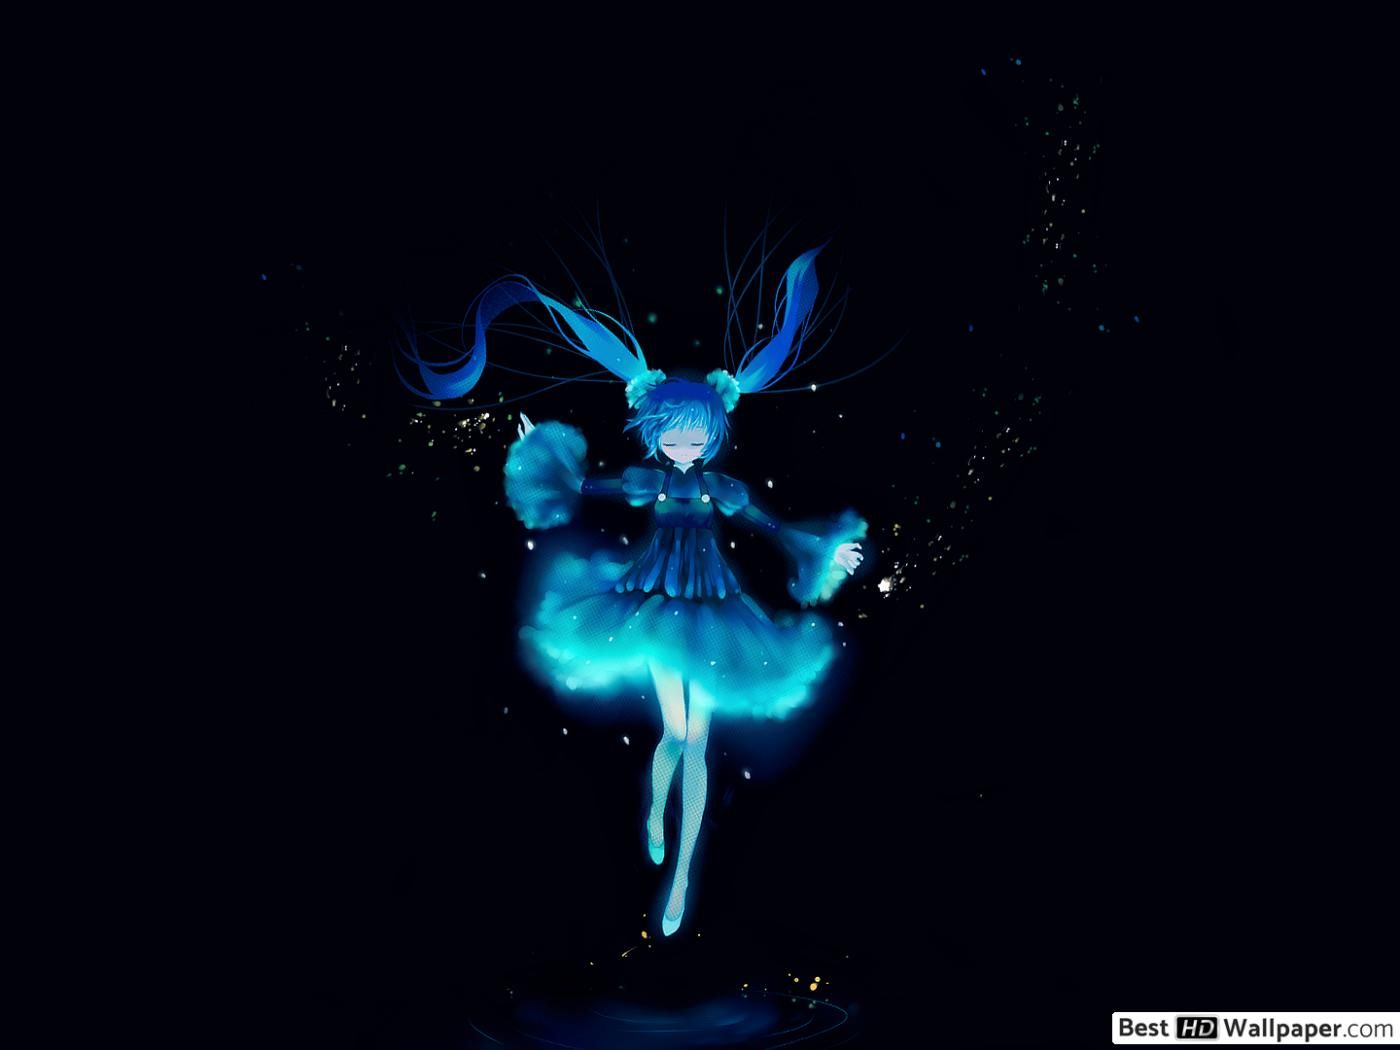 Blue Anime Girl HD Wallpaper Downloadbesthdwallpaper.com